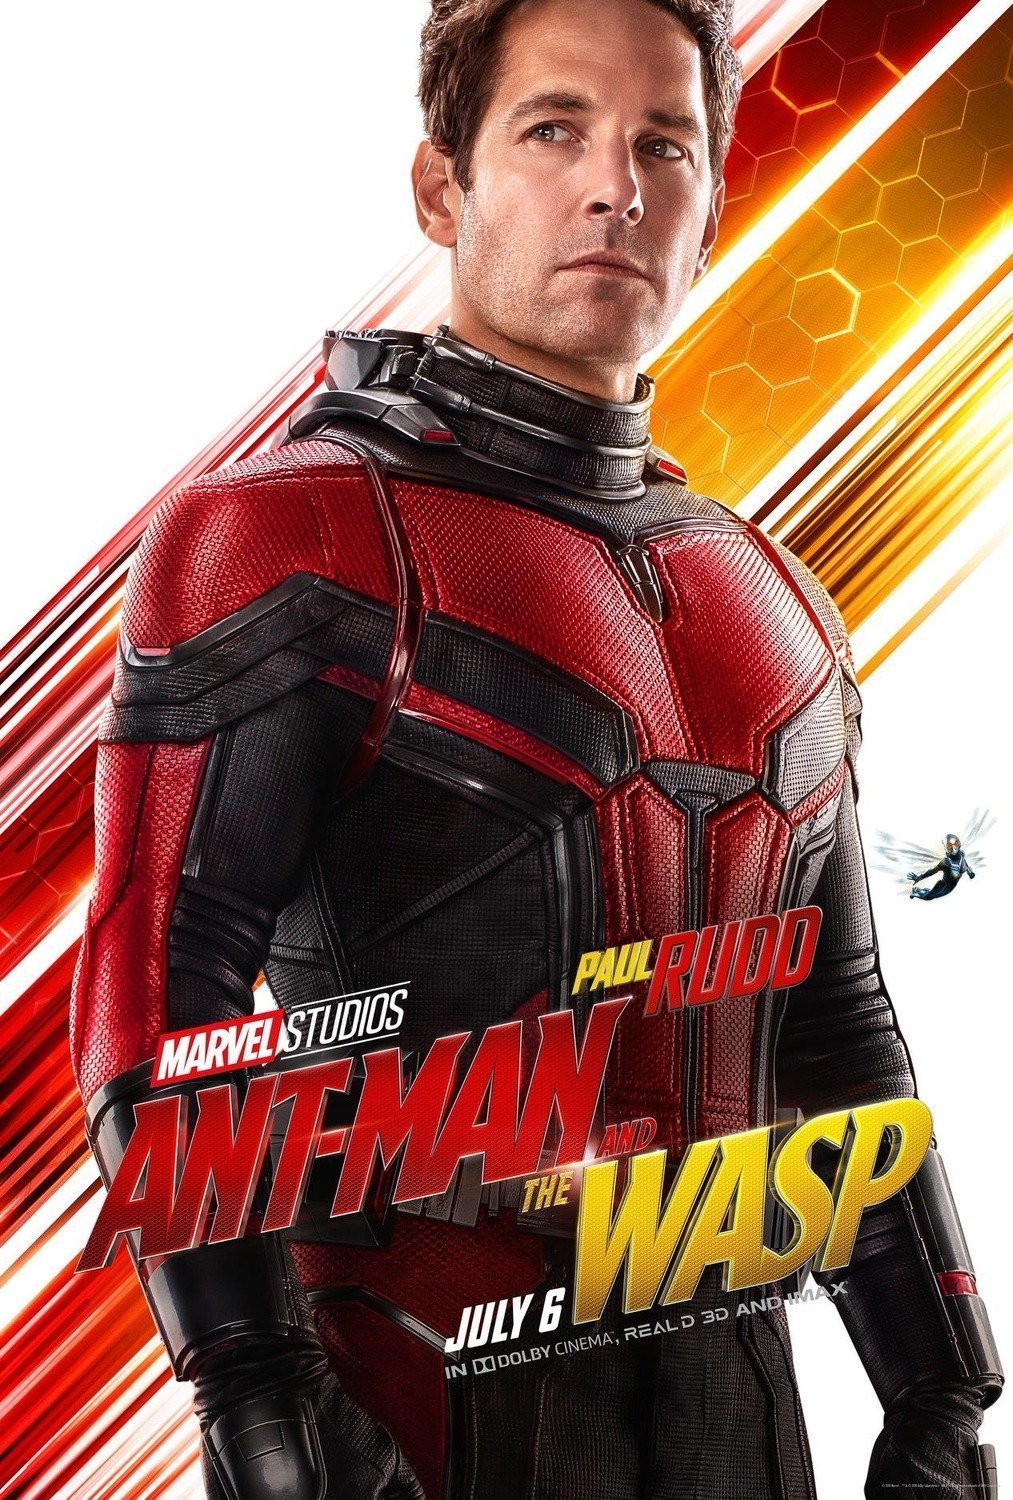 Poster du film Ant-Man et la Guêpe avec Scott Lang (Paul Rudd)